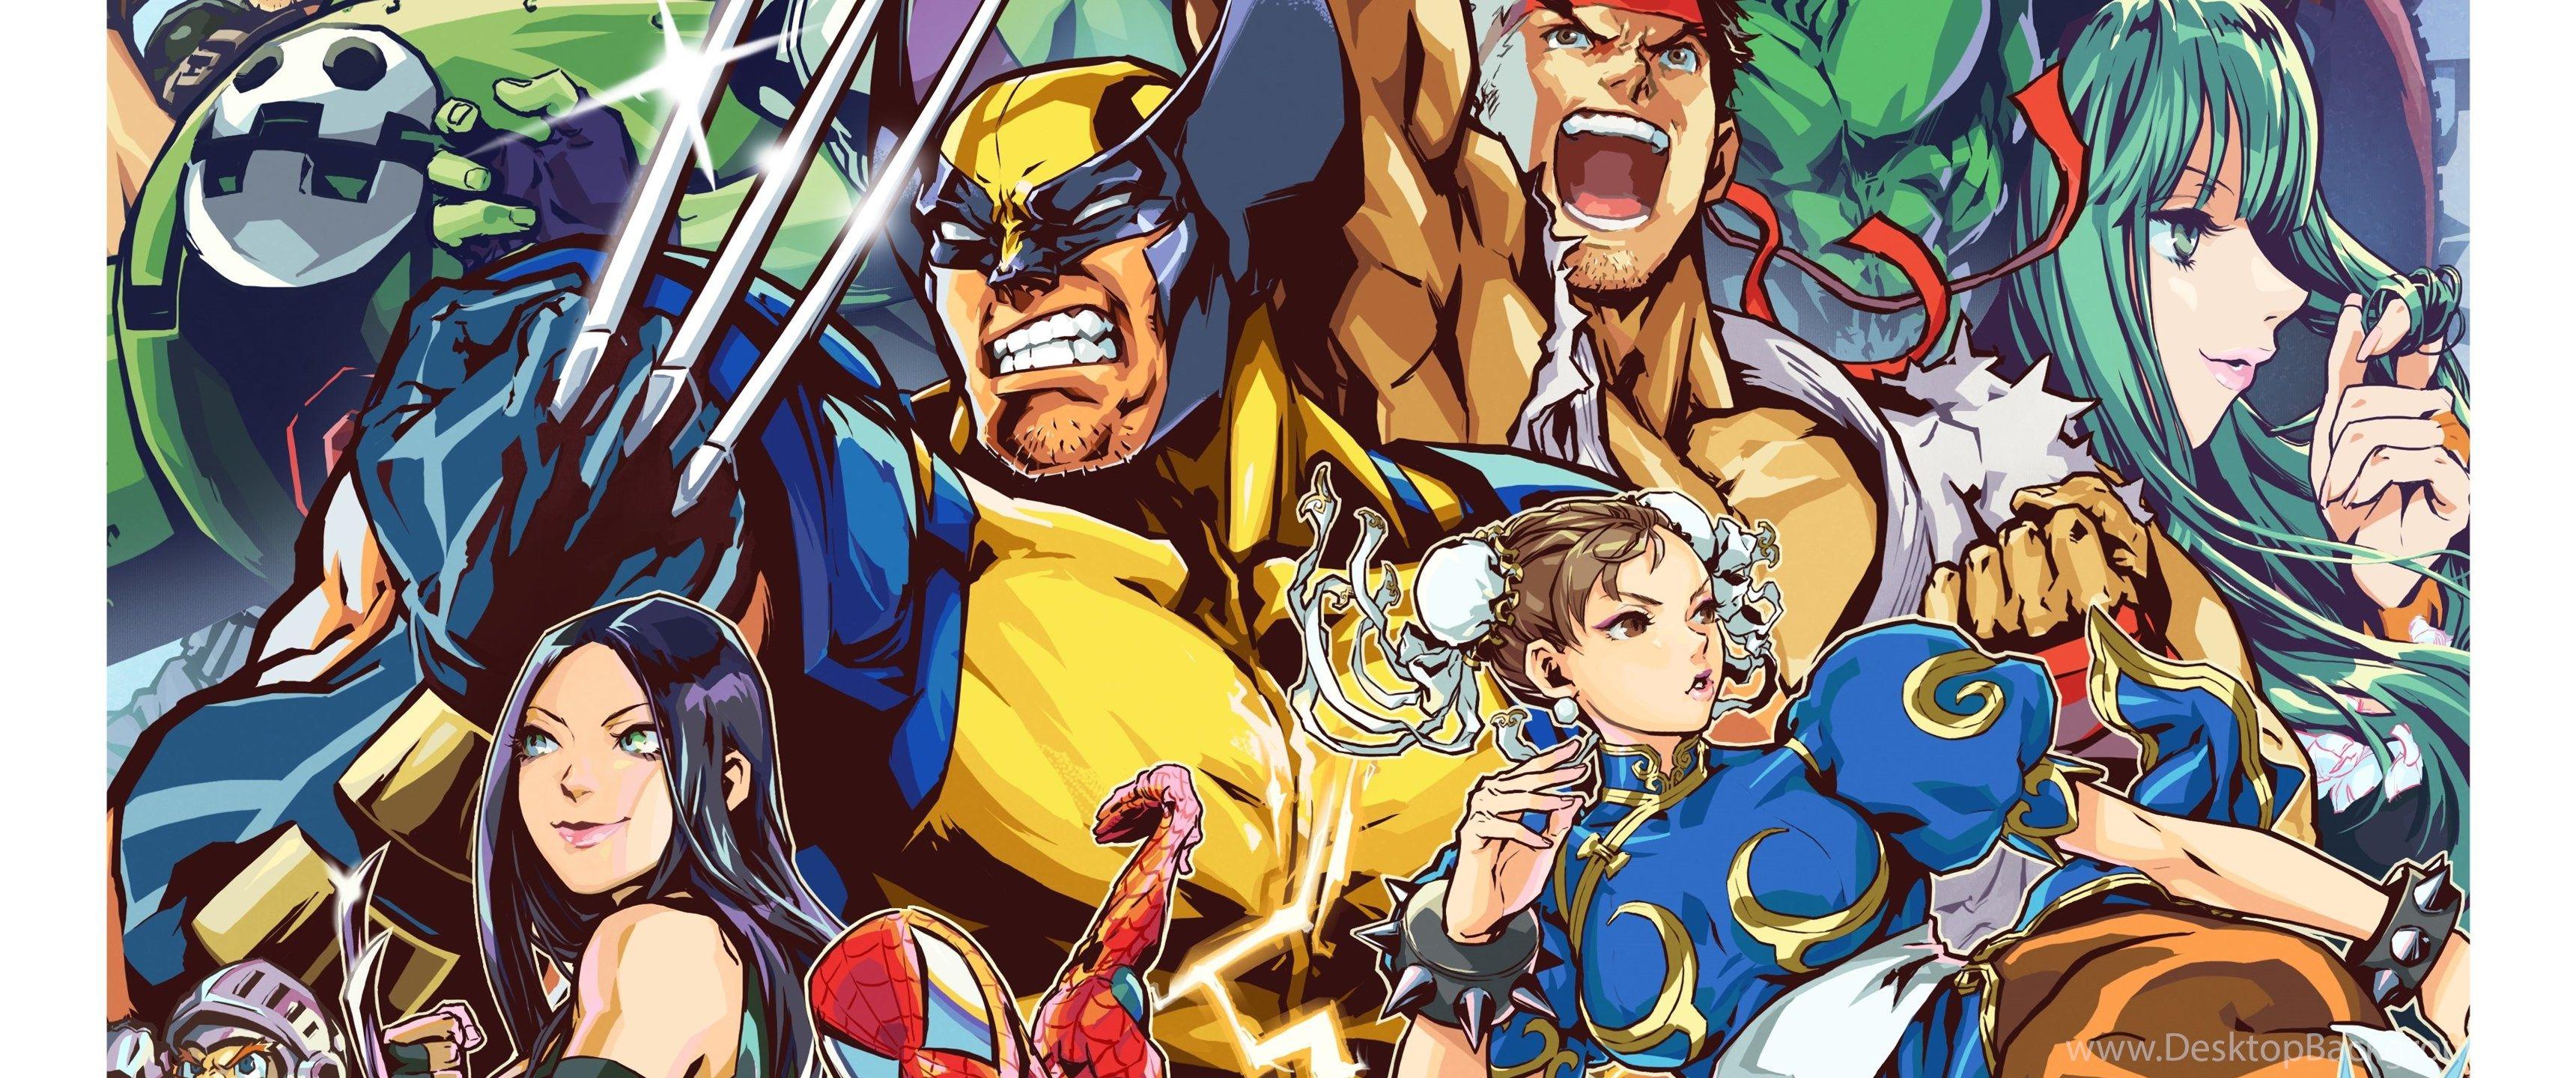 Quality Marvel Vs. Capcom Wallpaper, Video Games Desktop Background